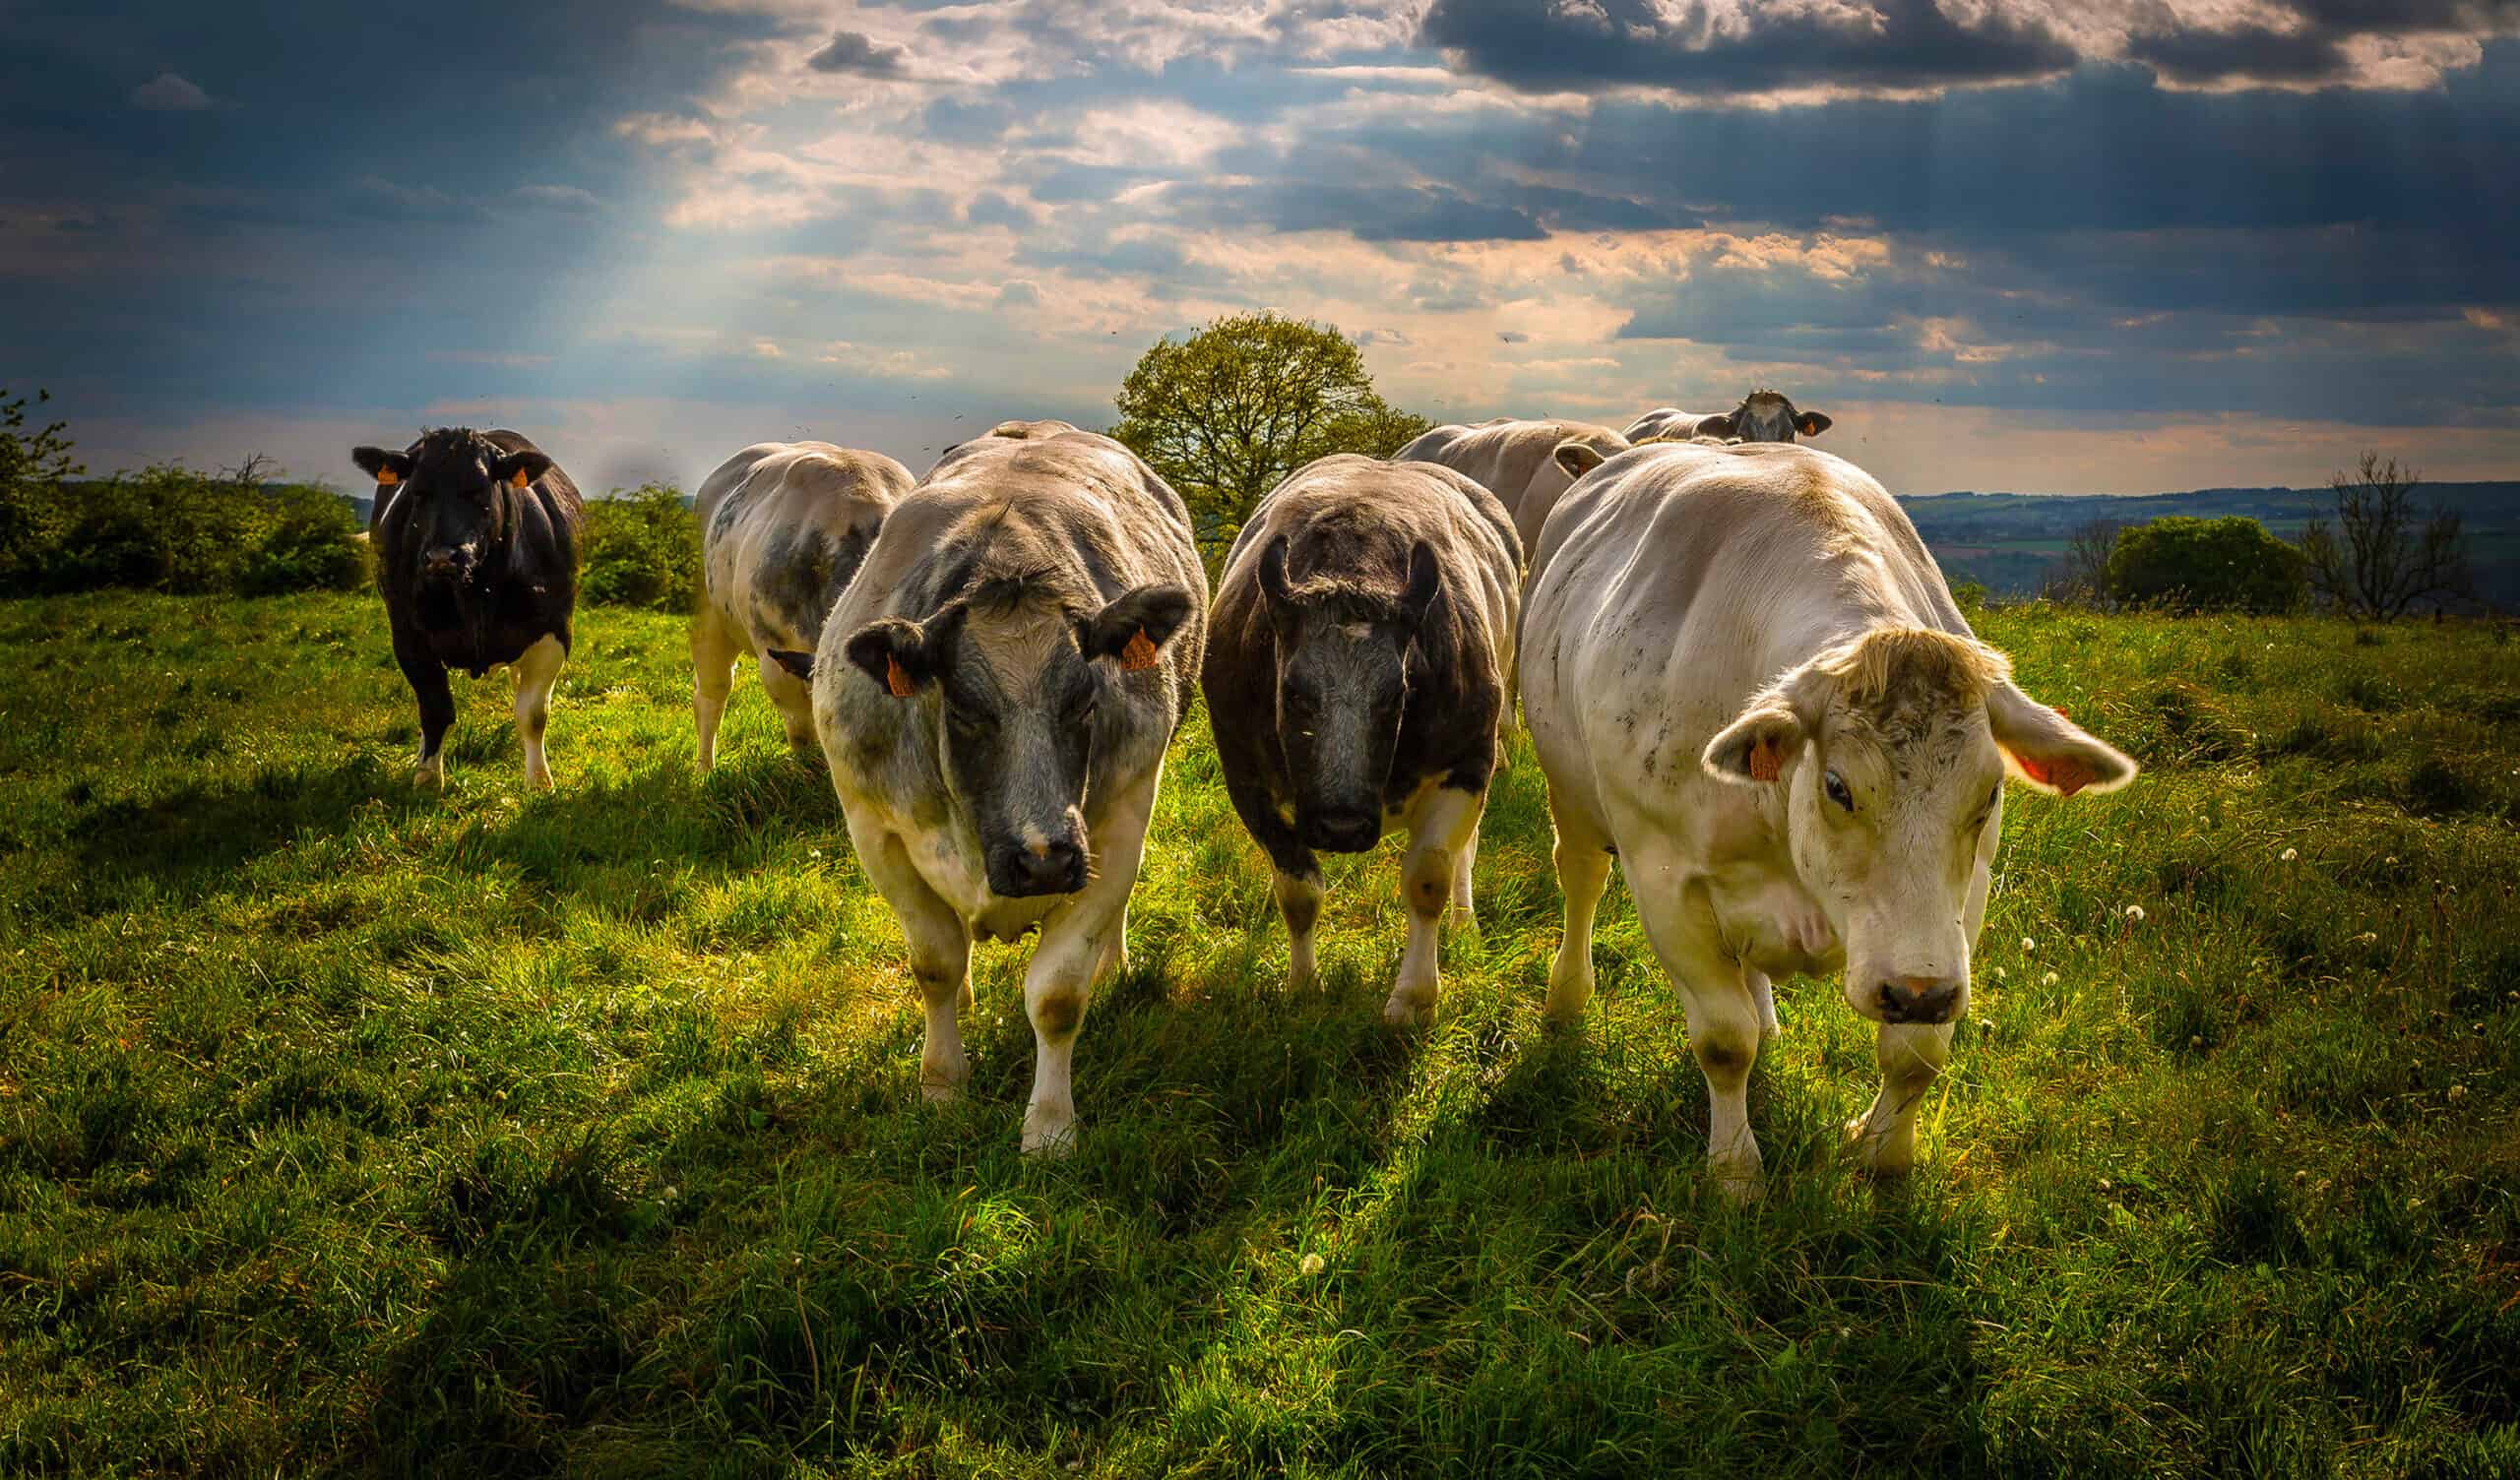 Diary cows grazing in a lush green field, friesian holstein milking cows